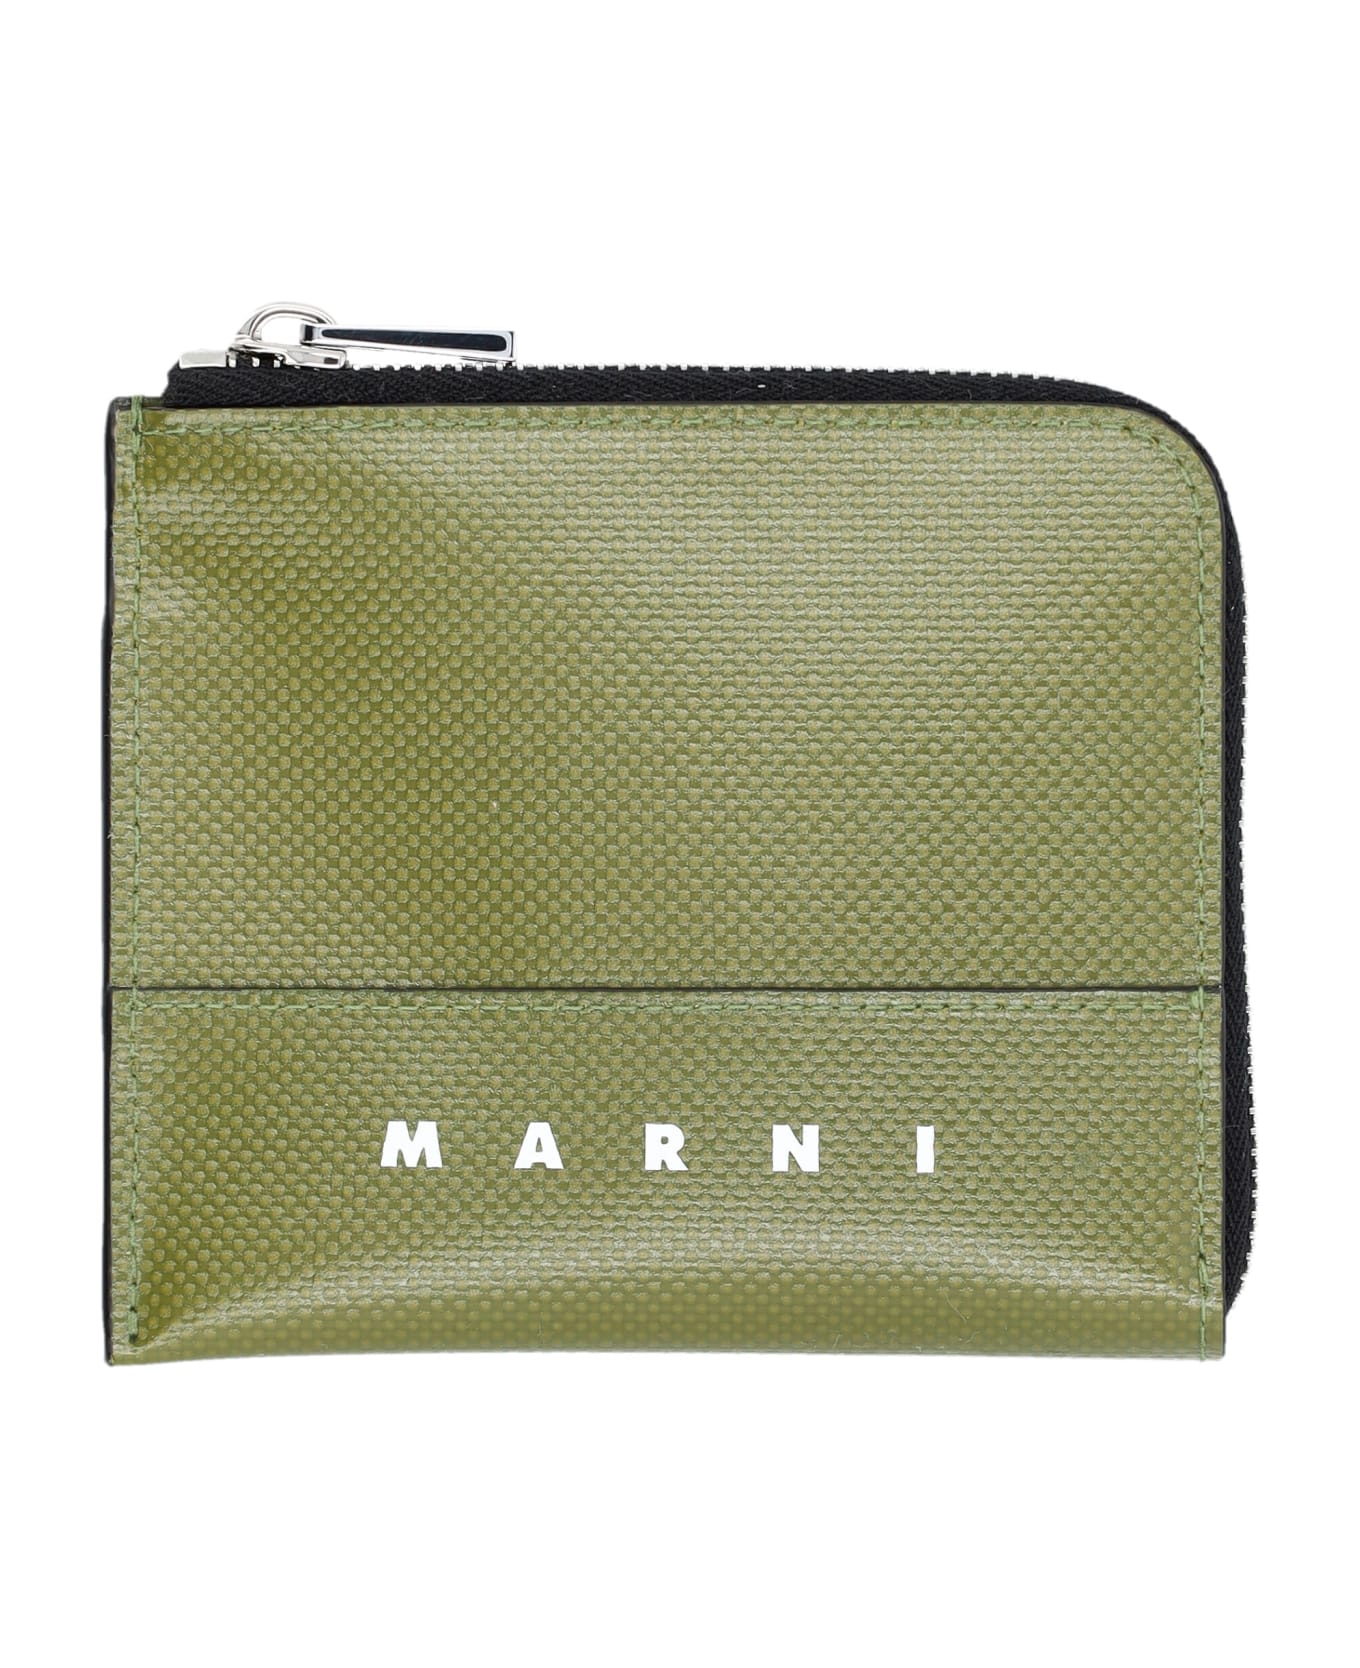 Marni Zip Wallet - MILITARY GREEN